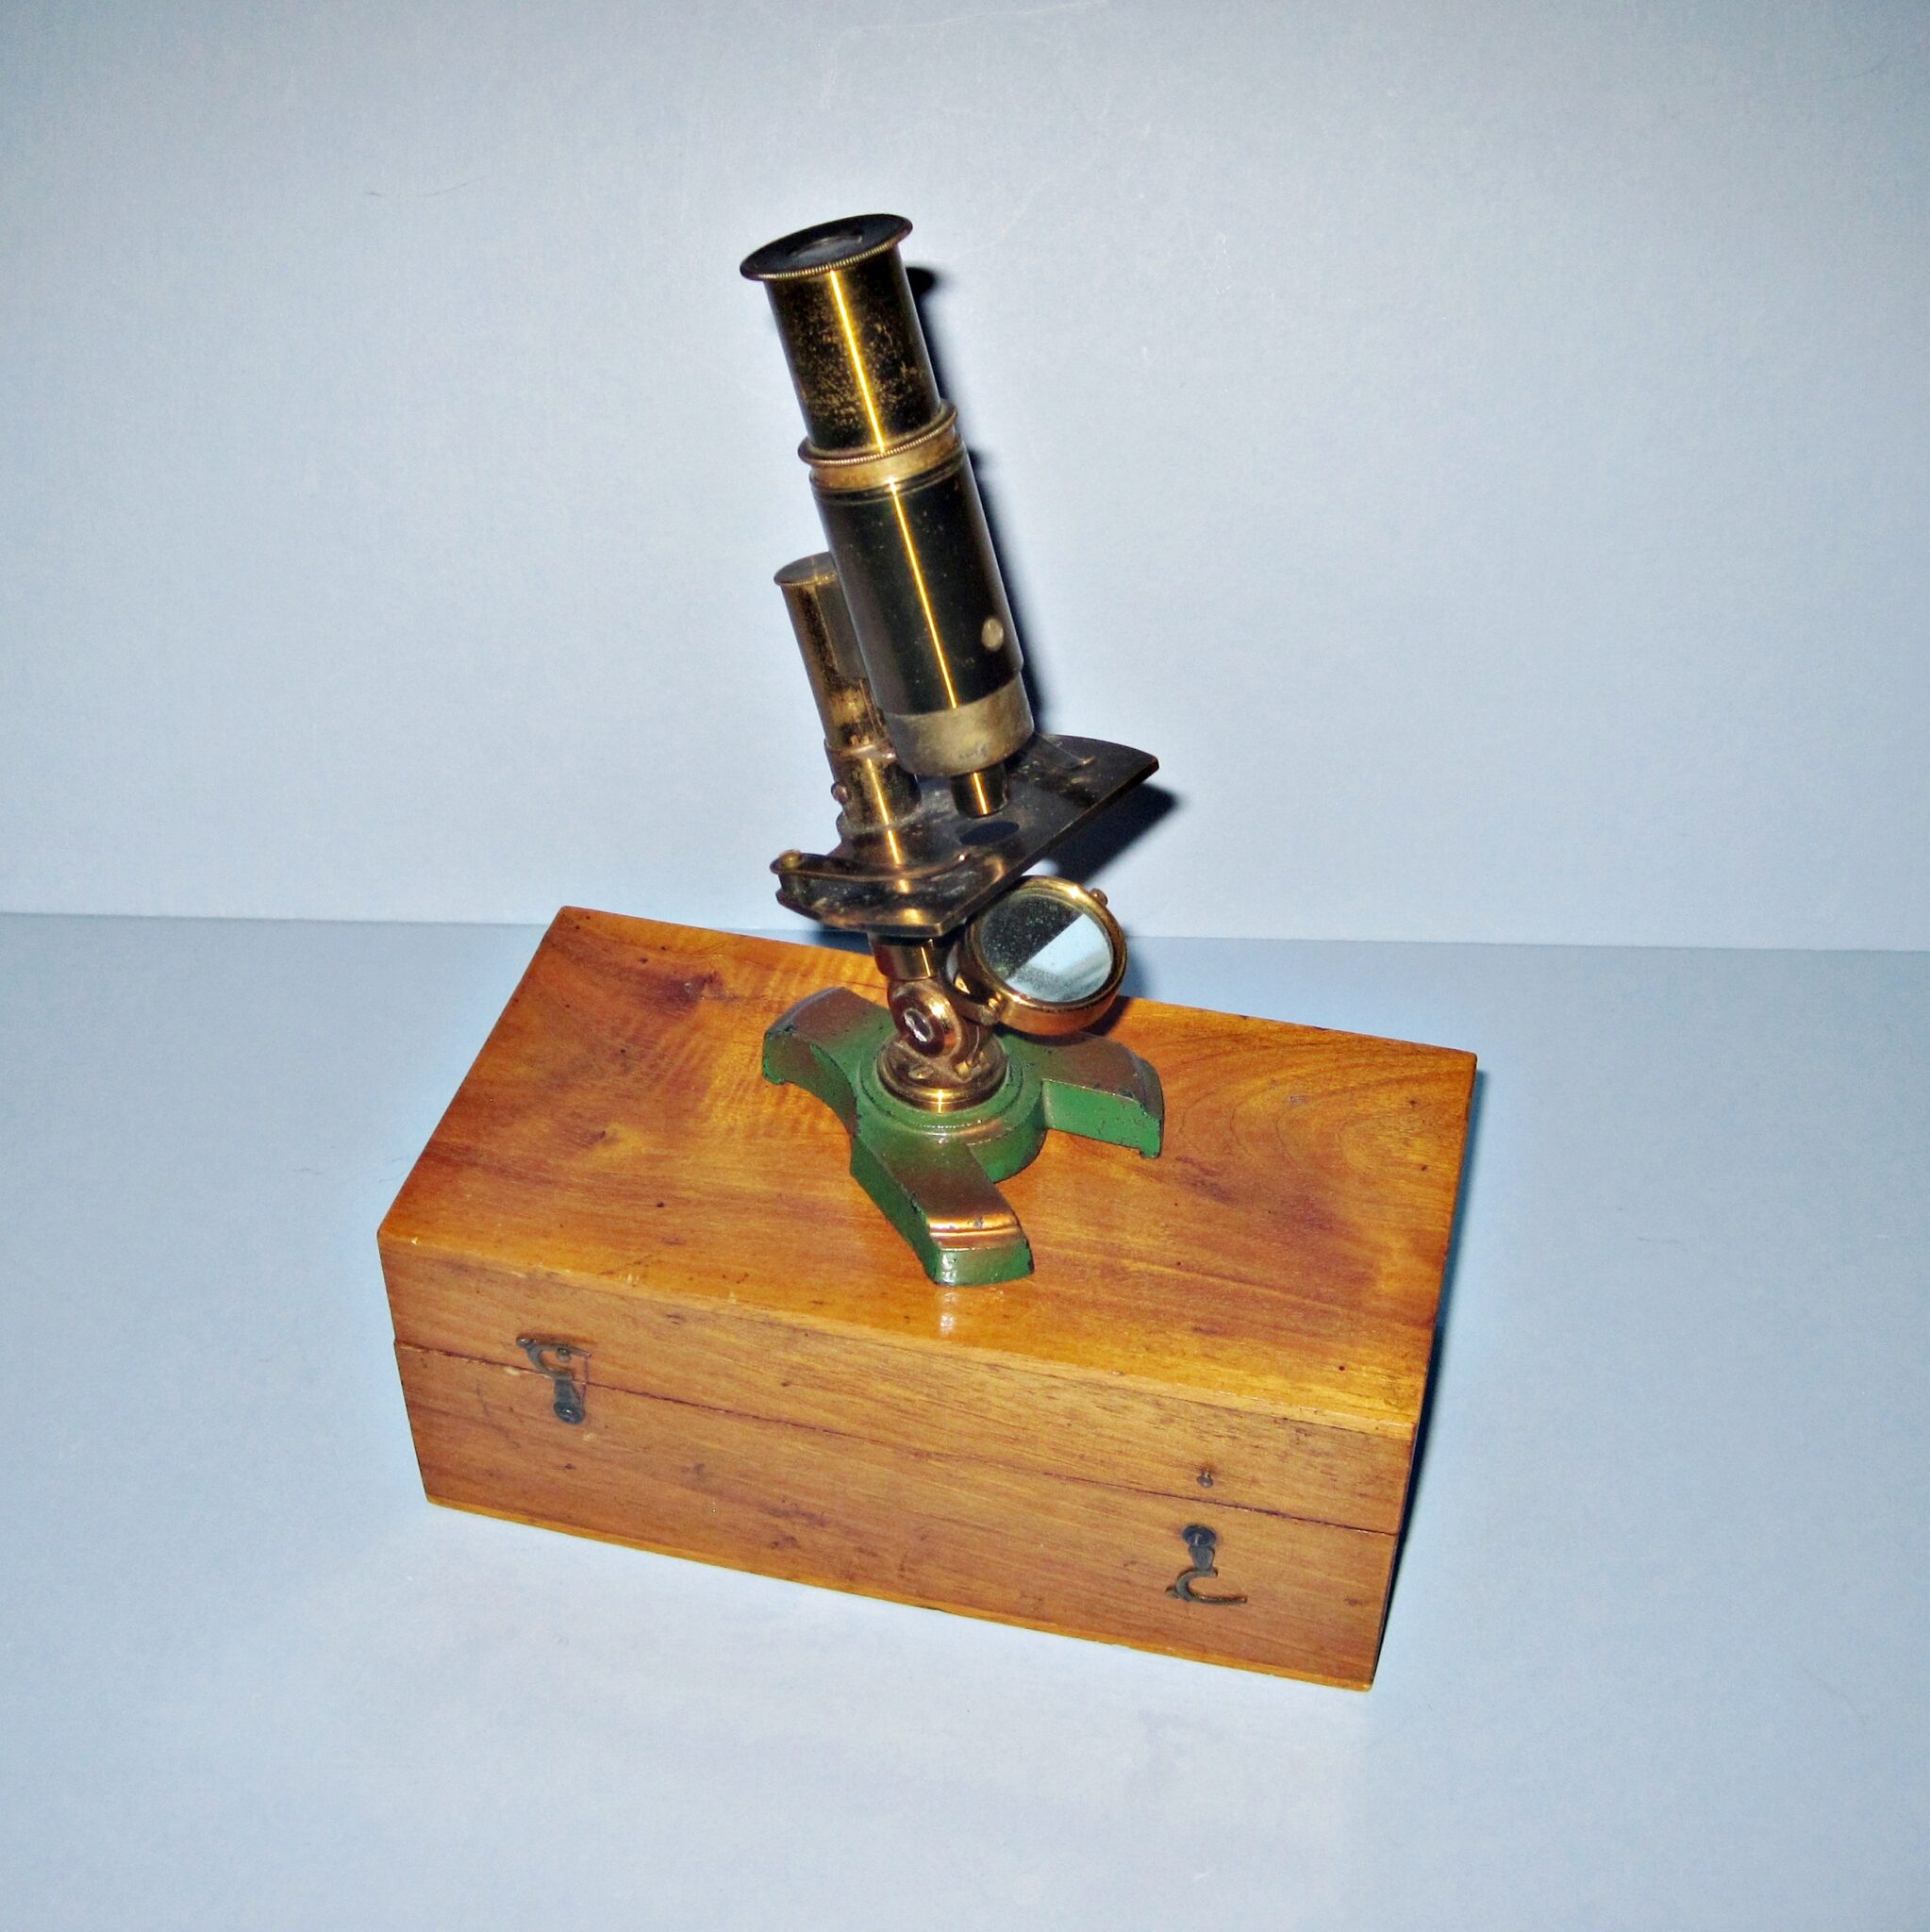 Late 19th-century compound monocular microscope